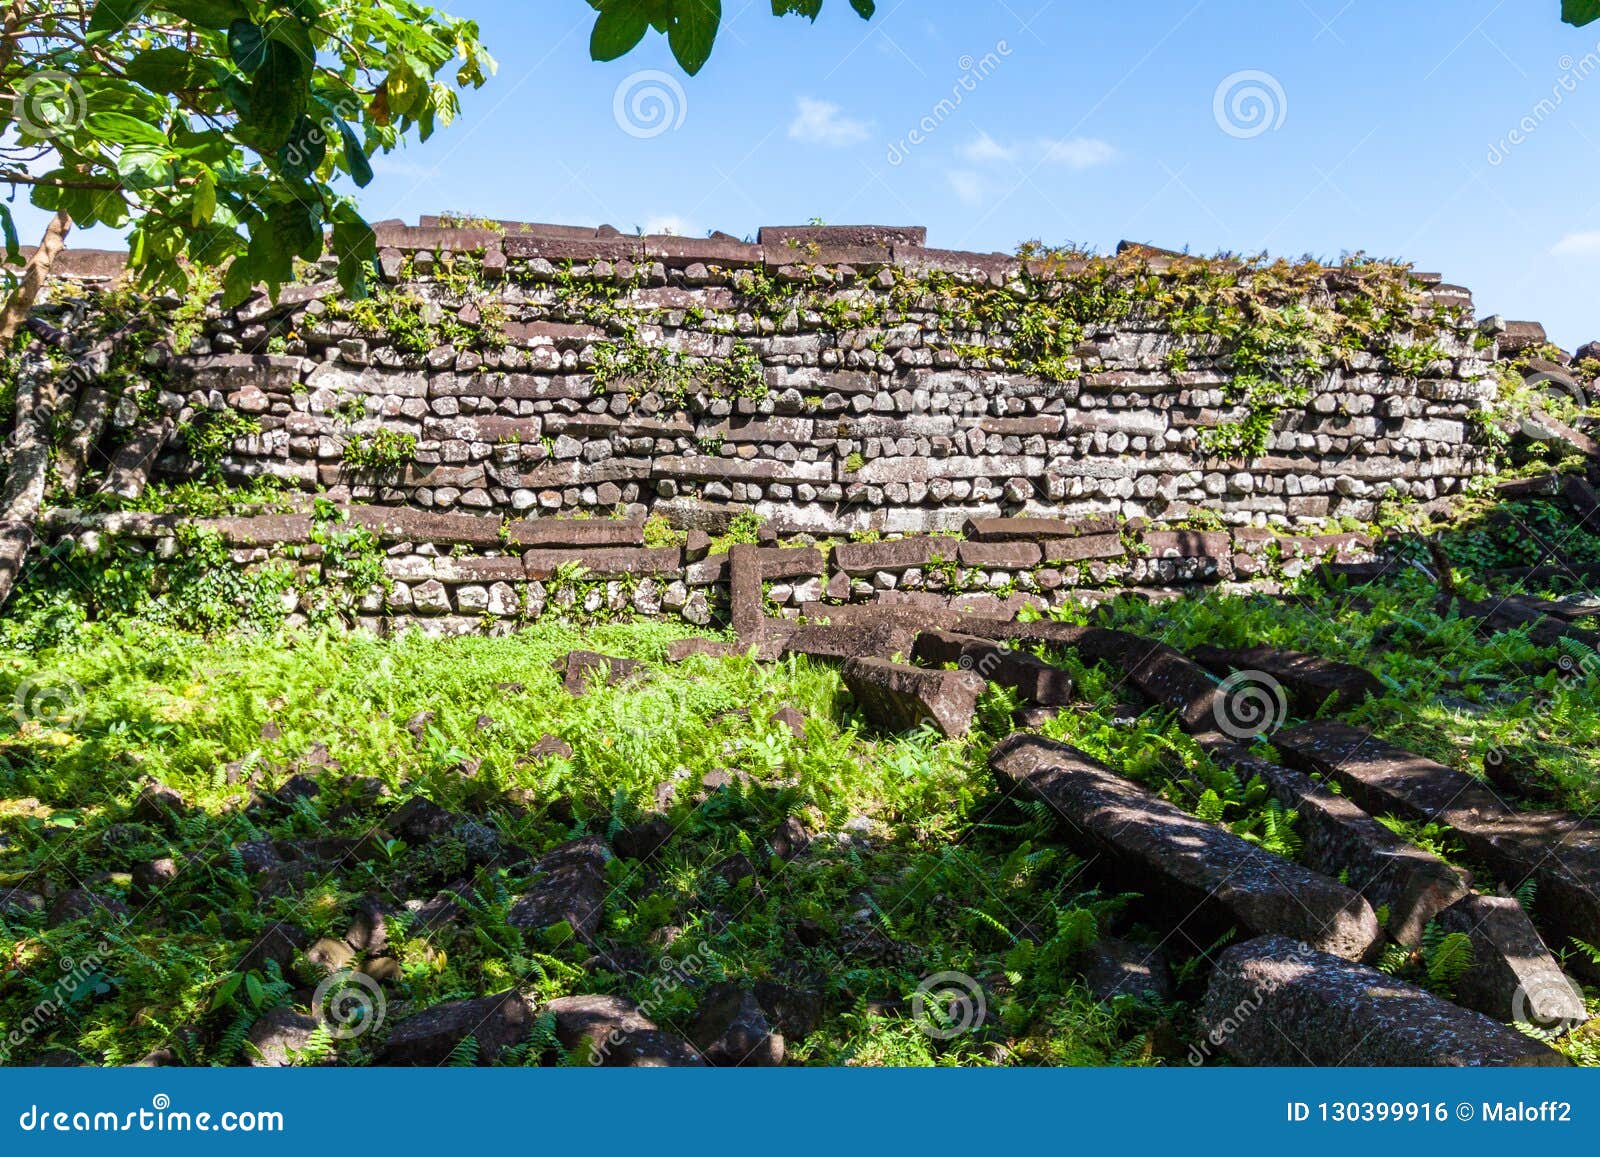 inside nan madol walls, masonry stonework of large basalt slabs. pohnpei, micronesia, oceania.